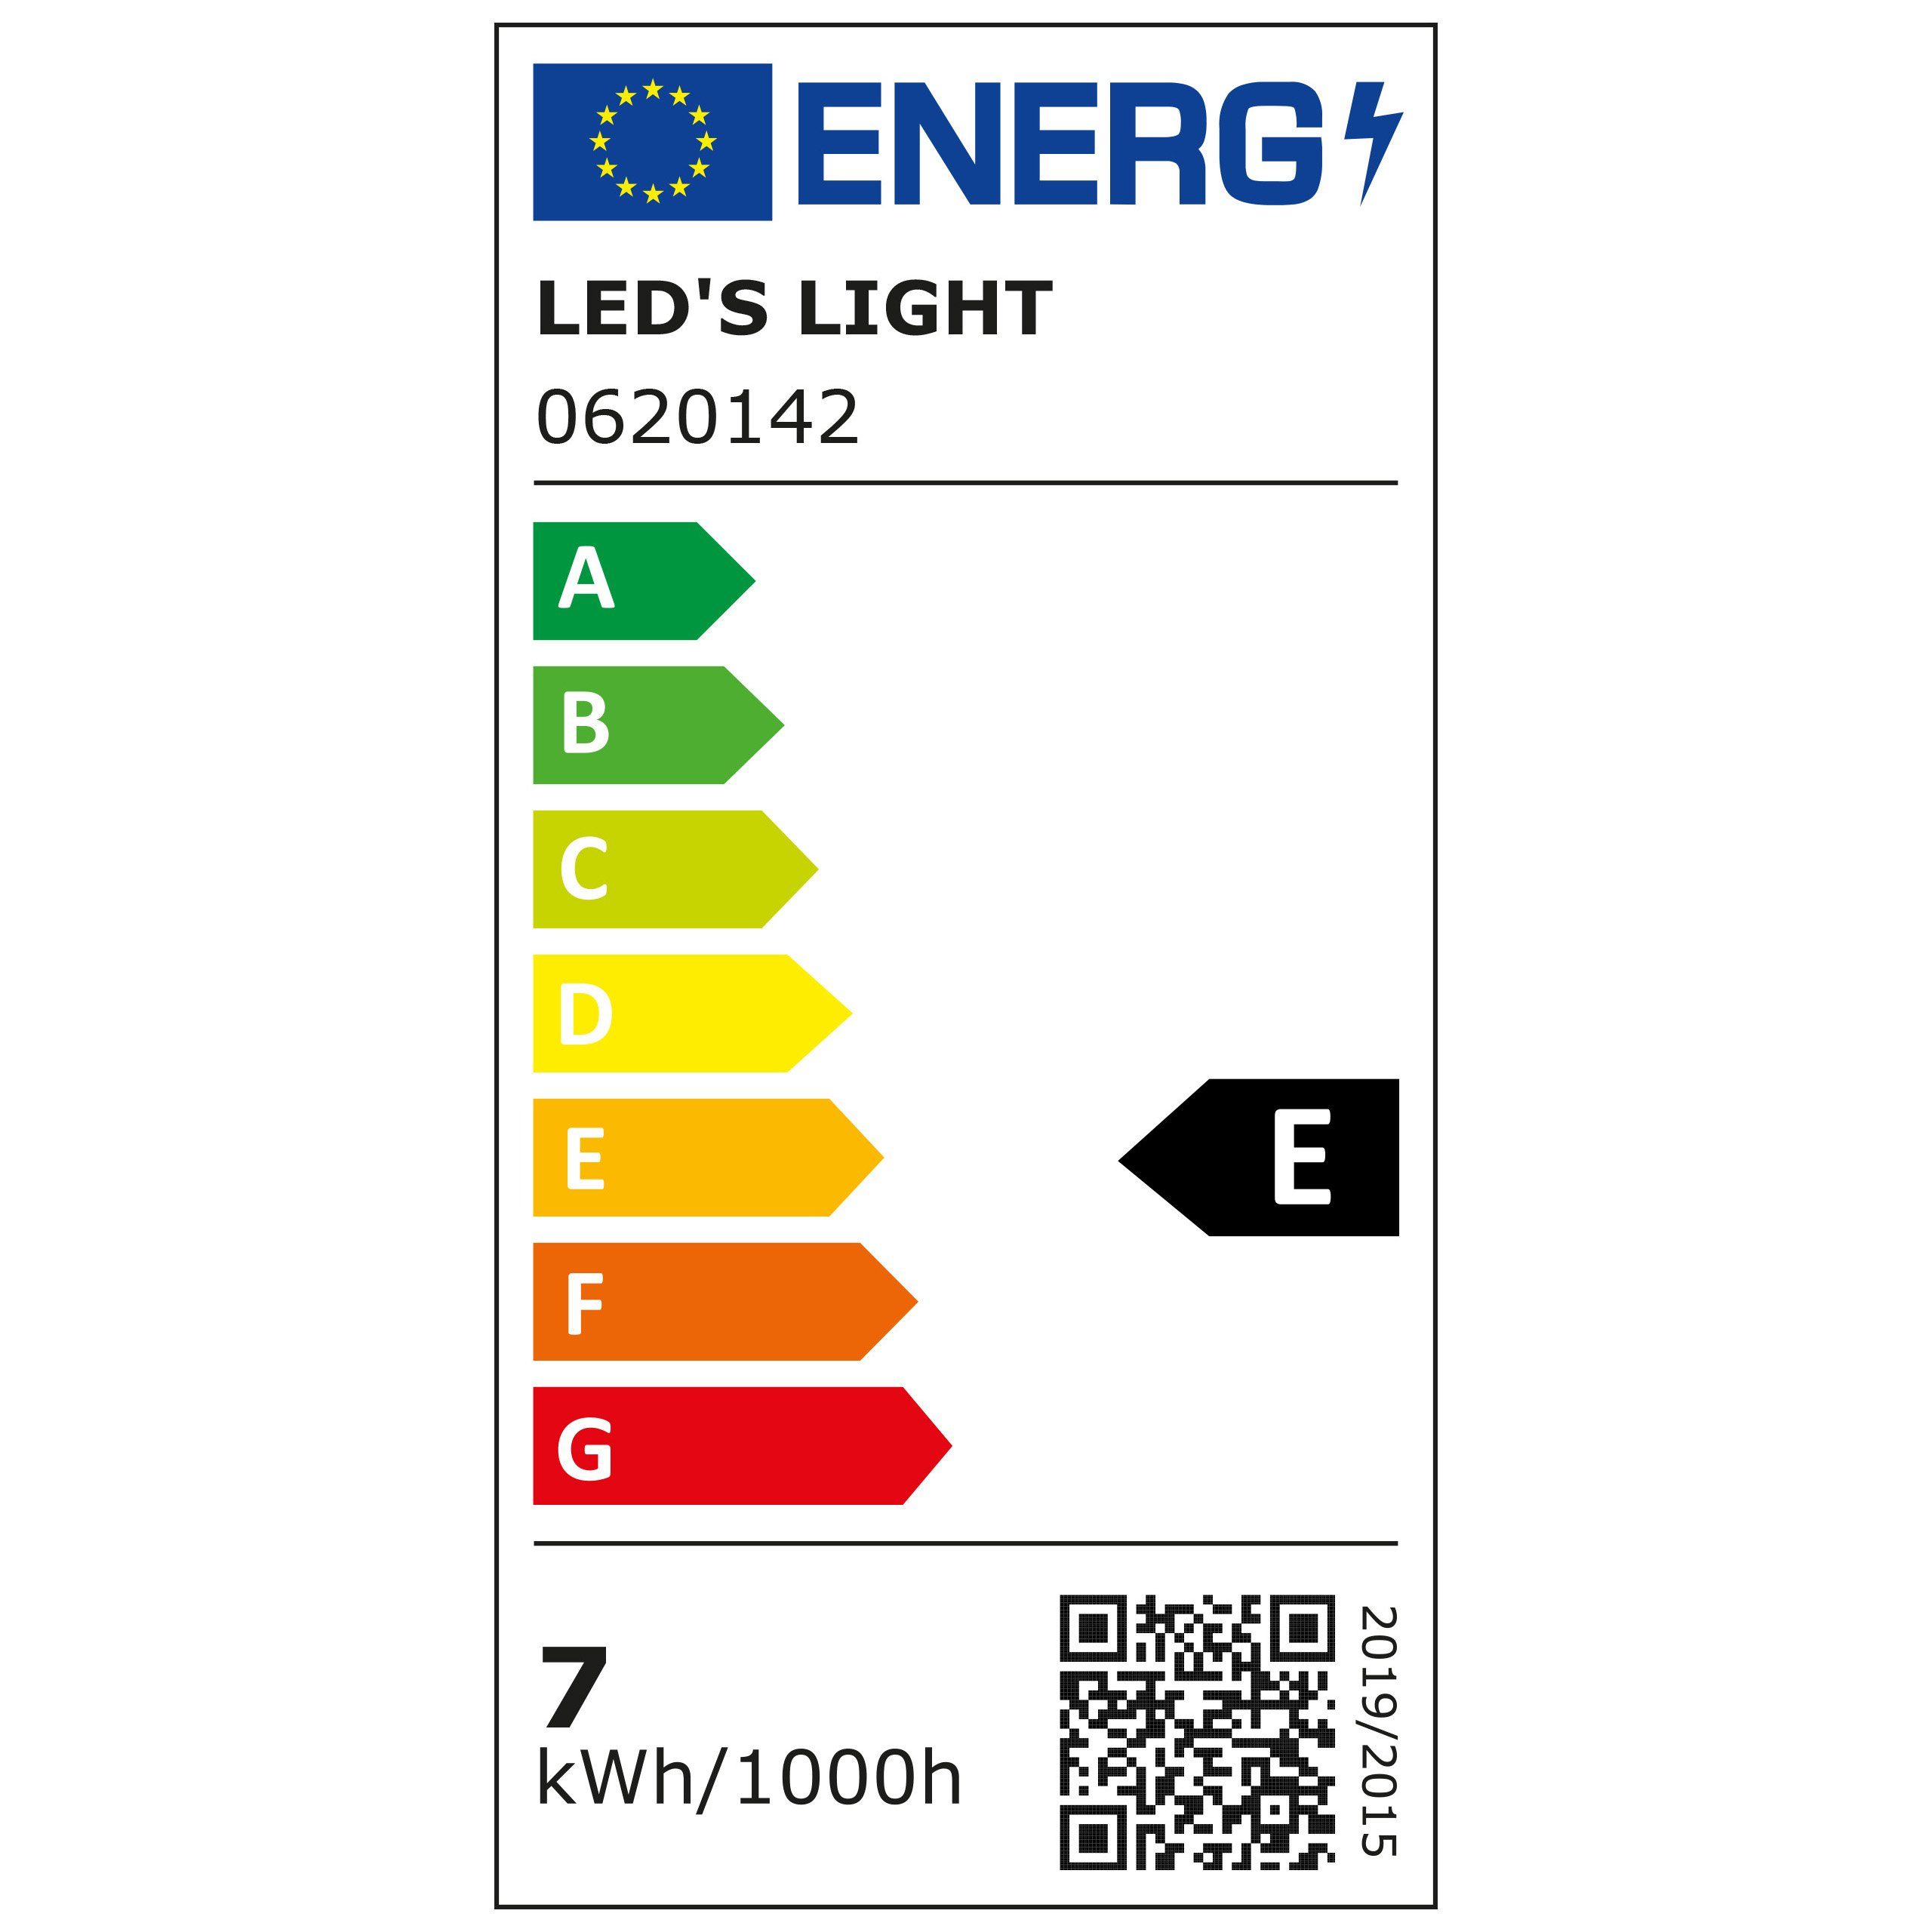 LED's light Birne, Klar A60 7,0W LED-Leuchtmittel LED 0620179 warmweiß 3-Pack E27, E27